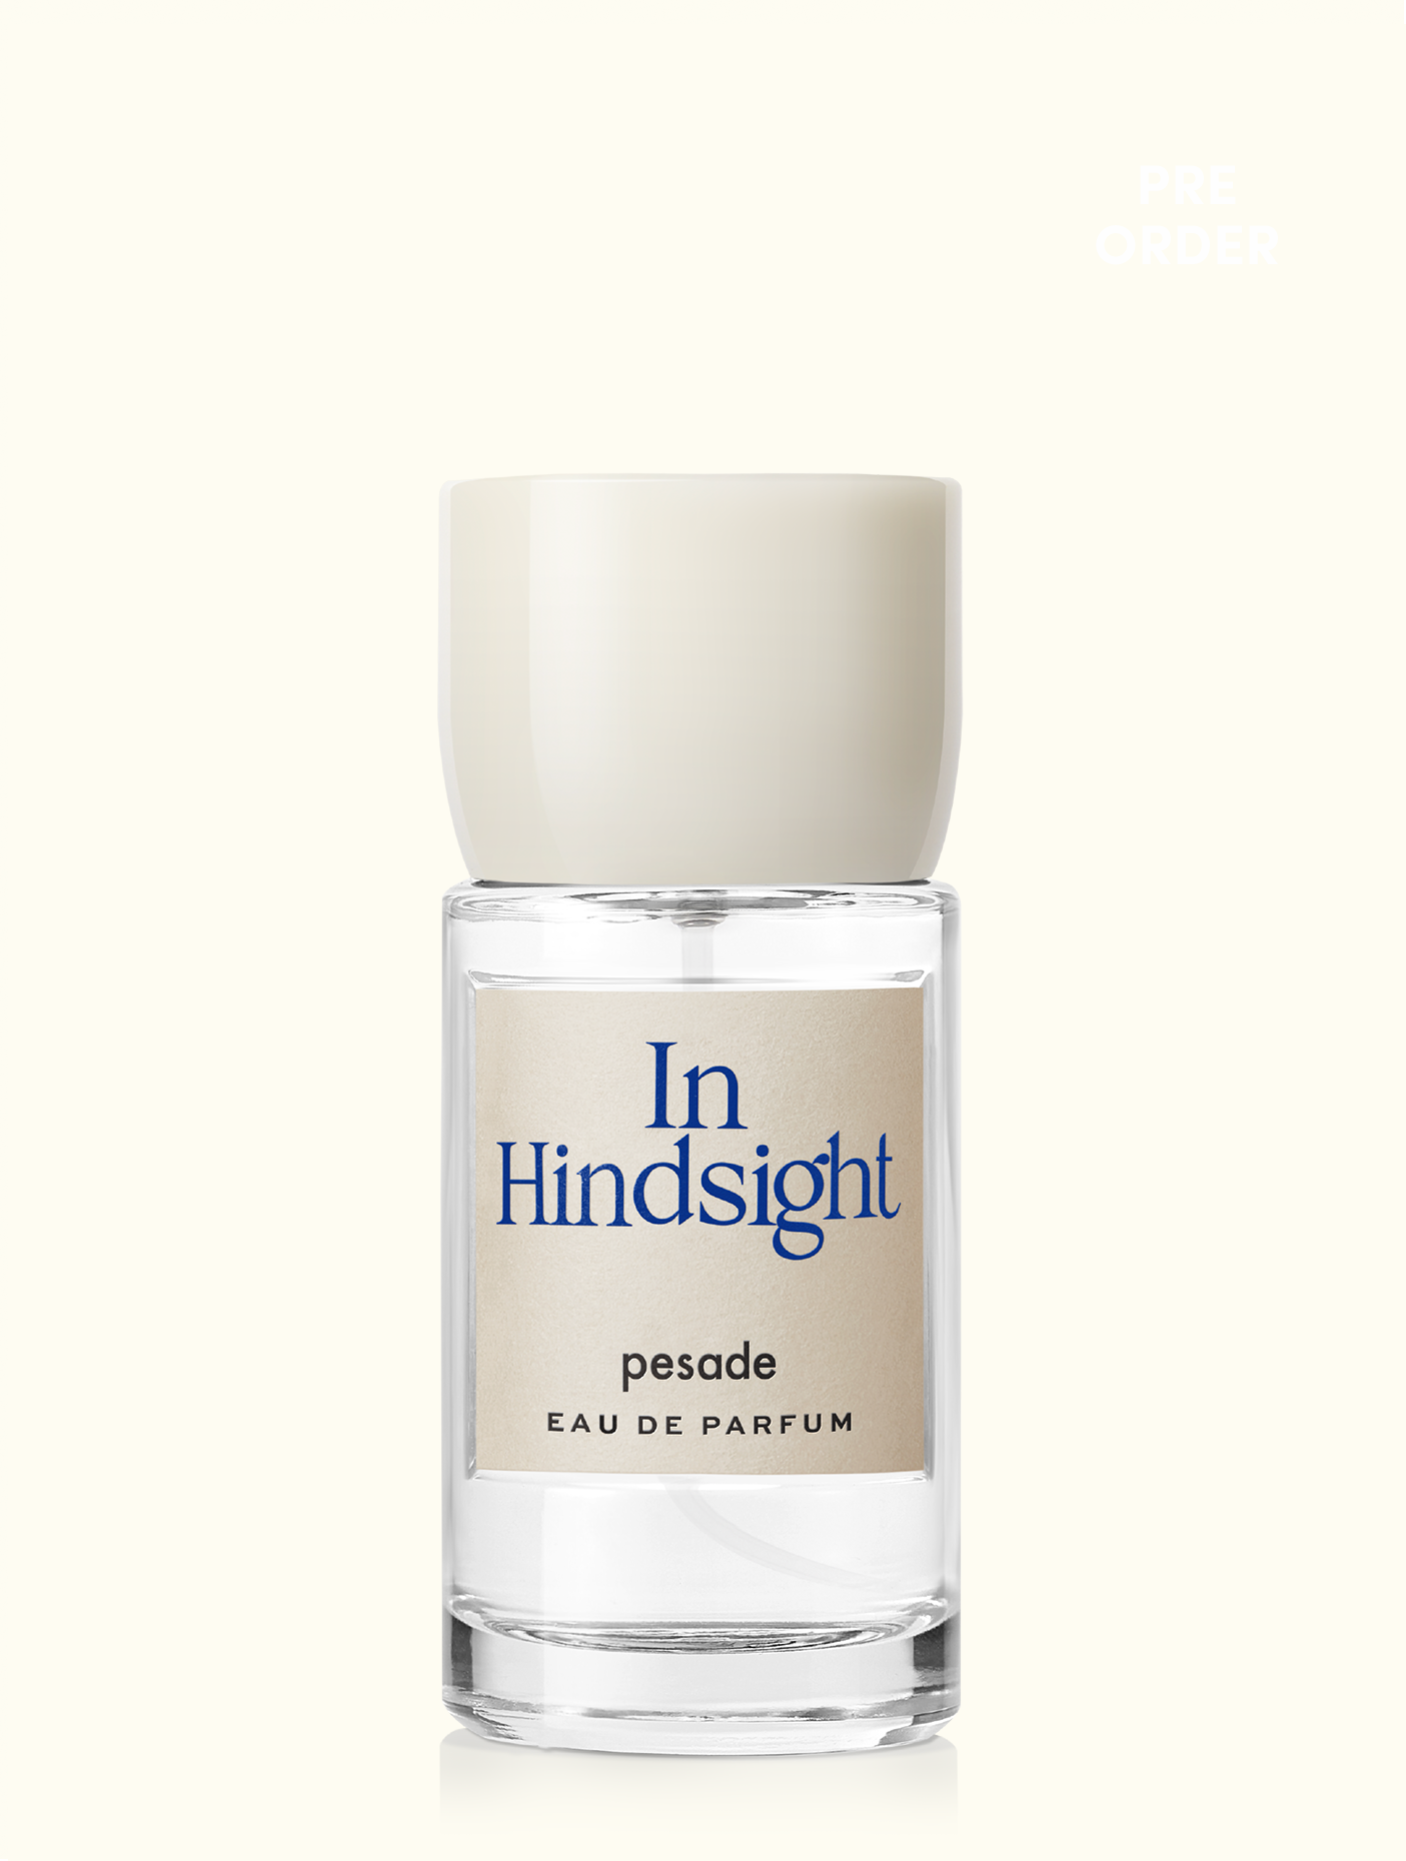 In Hindsight Eau de parfum 30ml